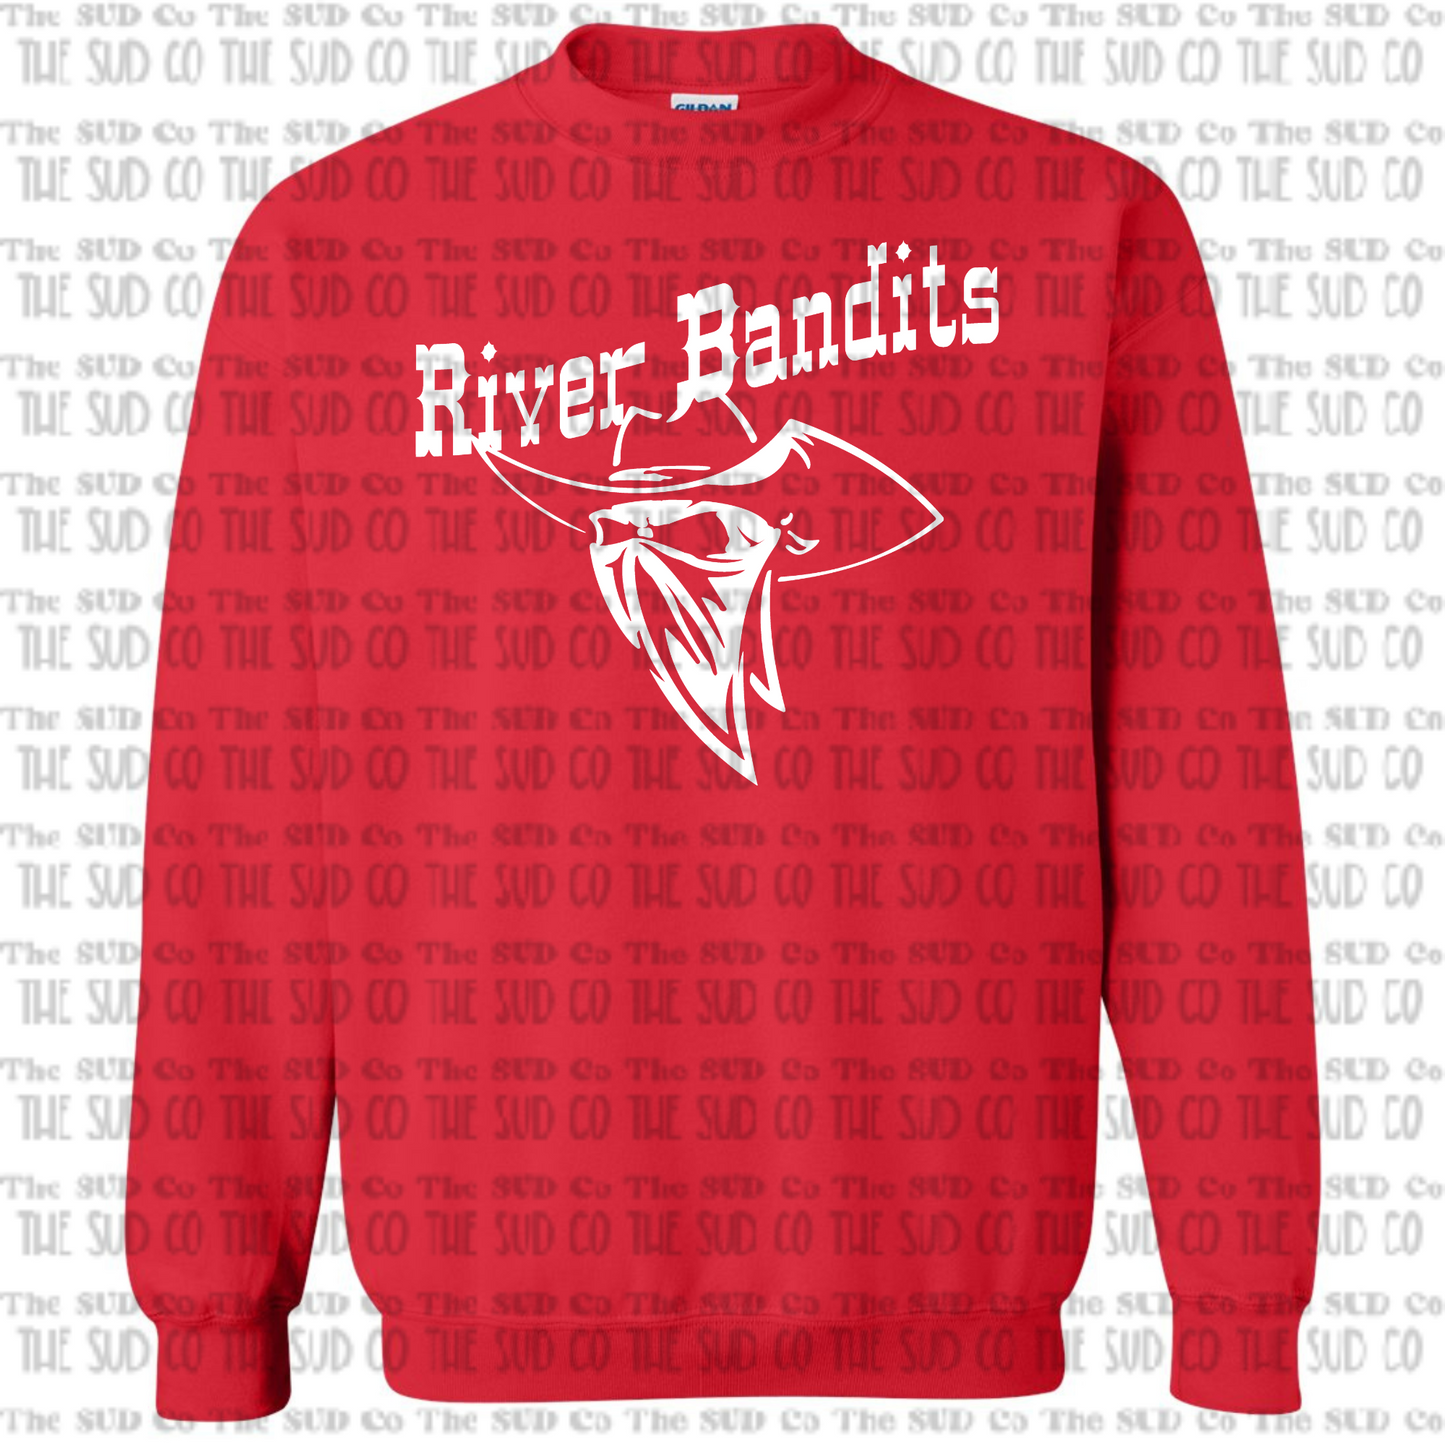 River Bandits Crewneck Sweatshirt - Red